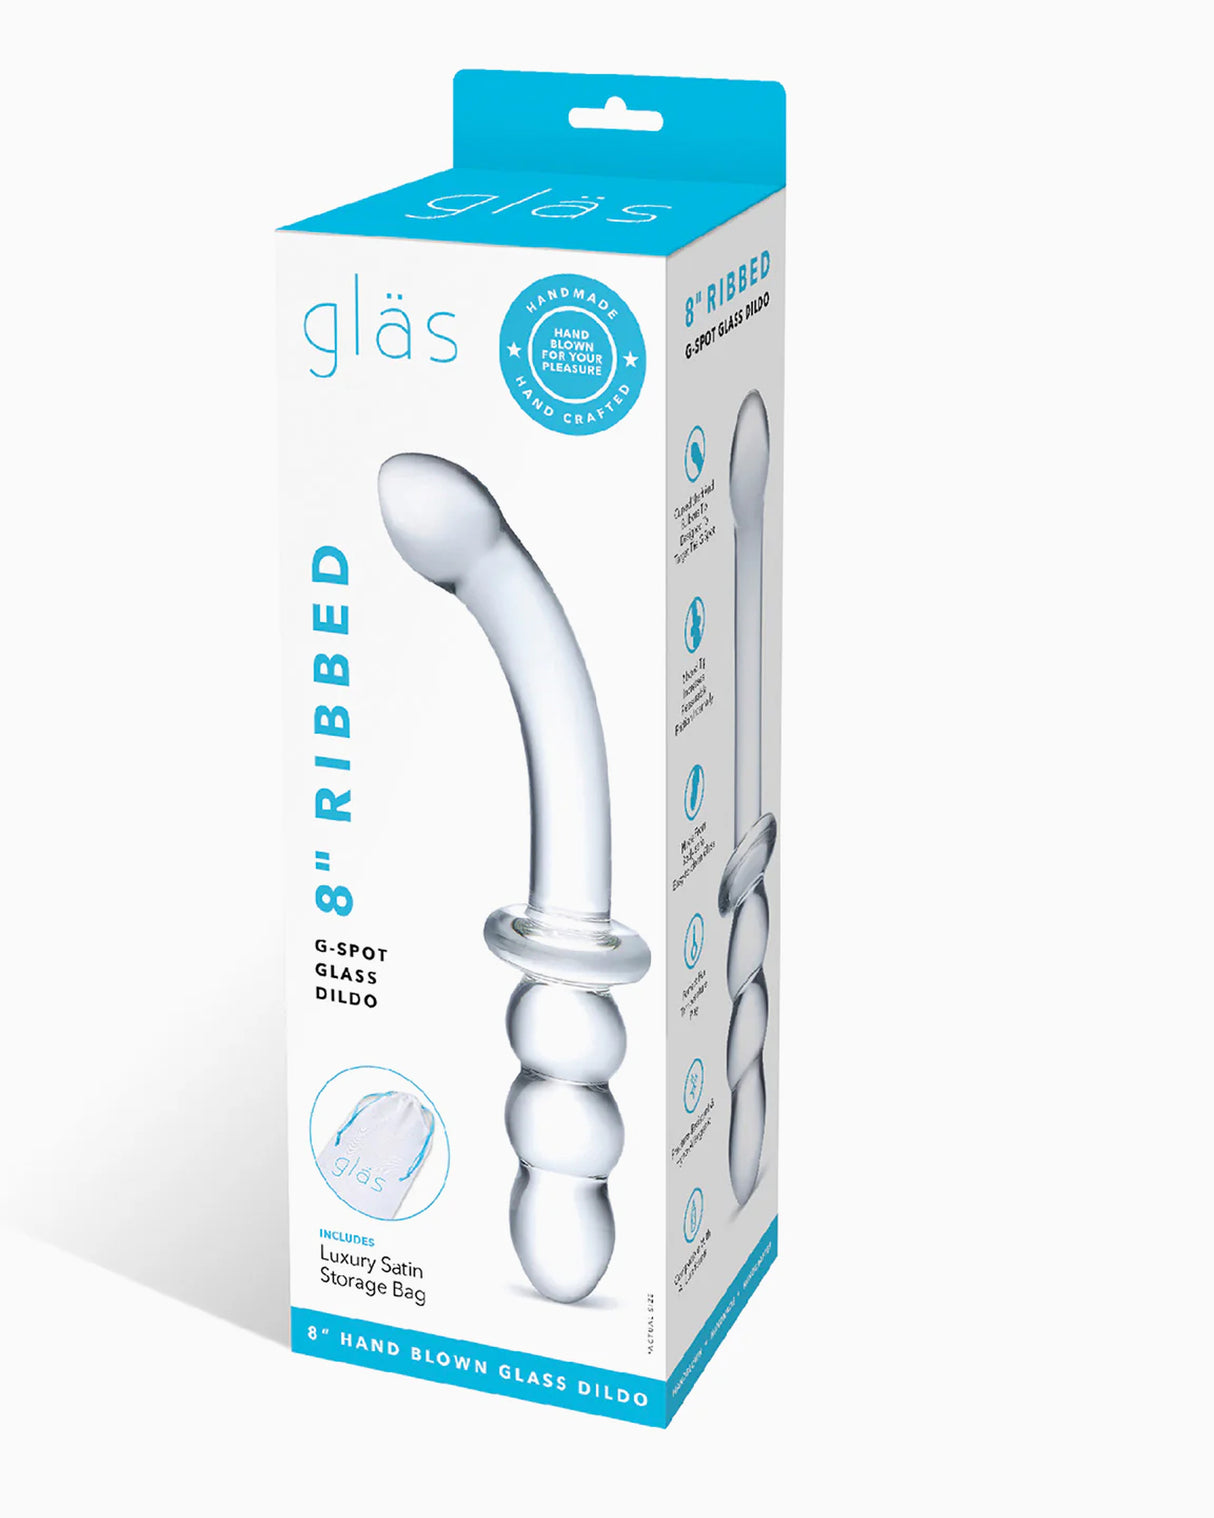 Glas Ribbed G-Spot Glass Dildo, 8 Inches